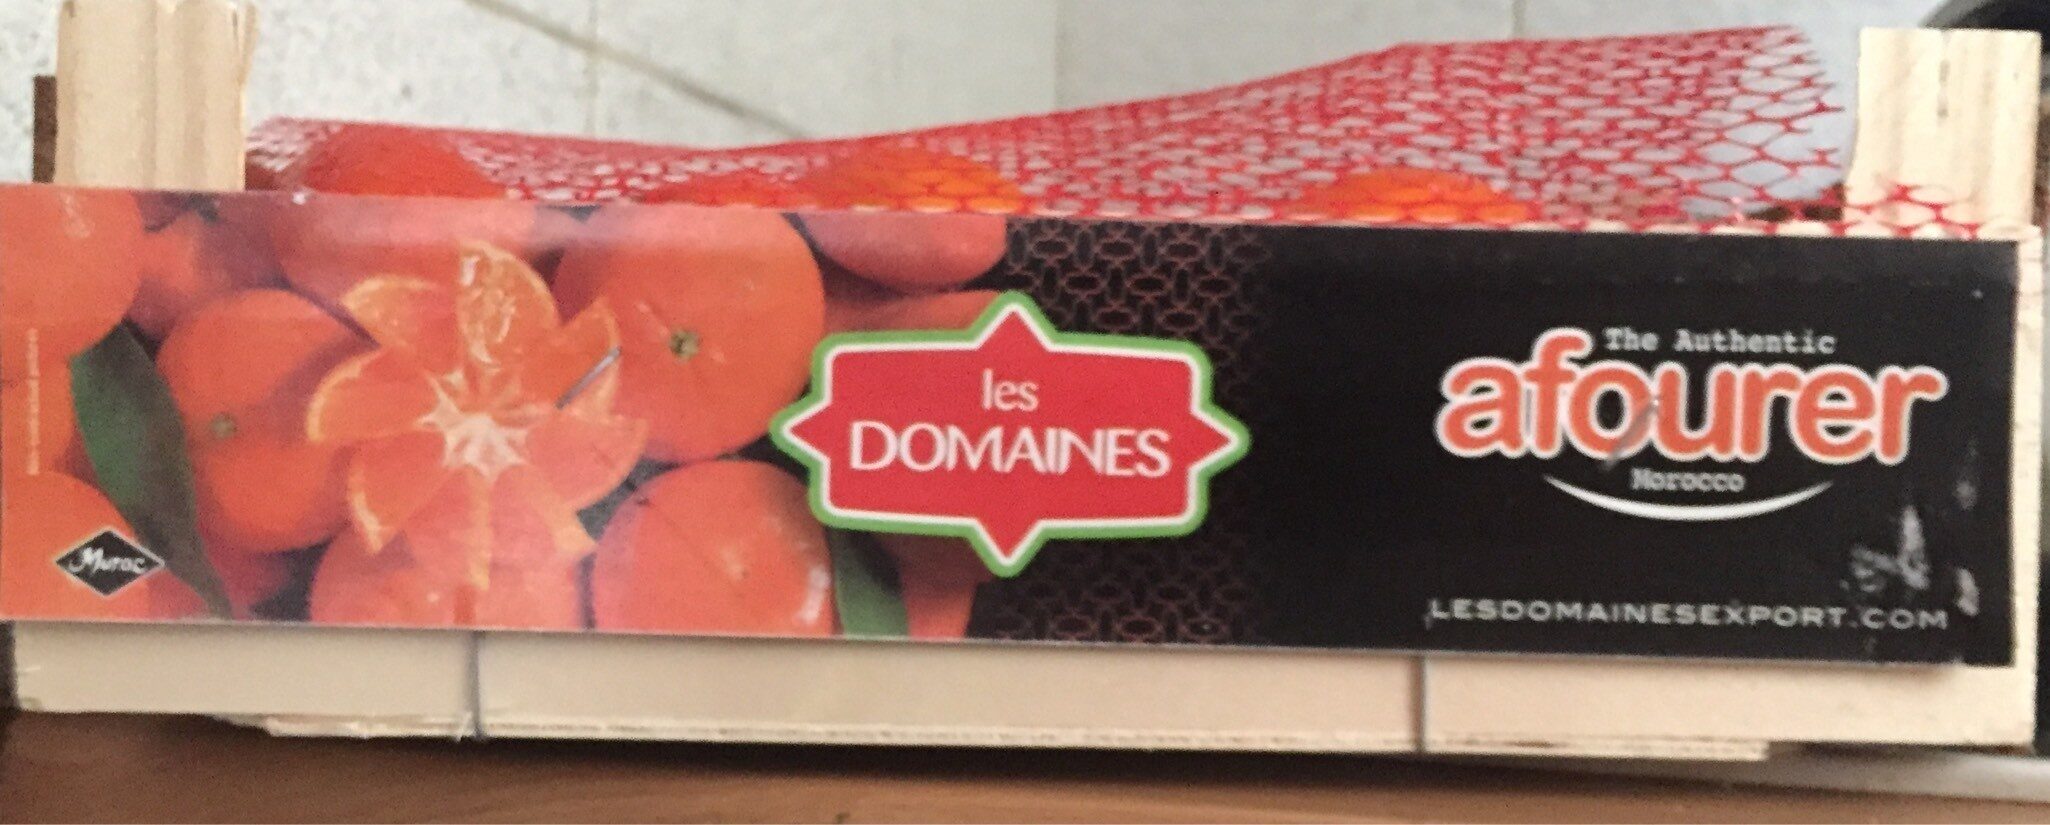 Clementine - Produkt - fr